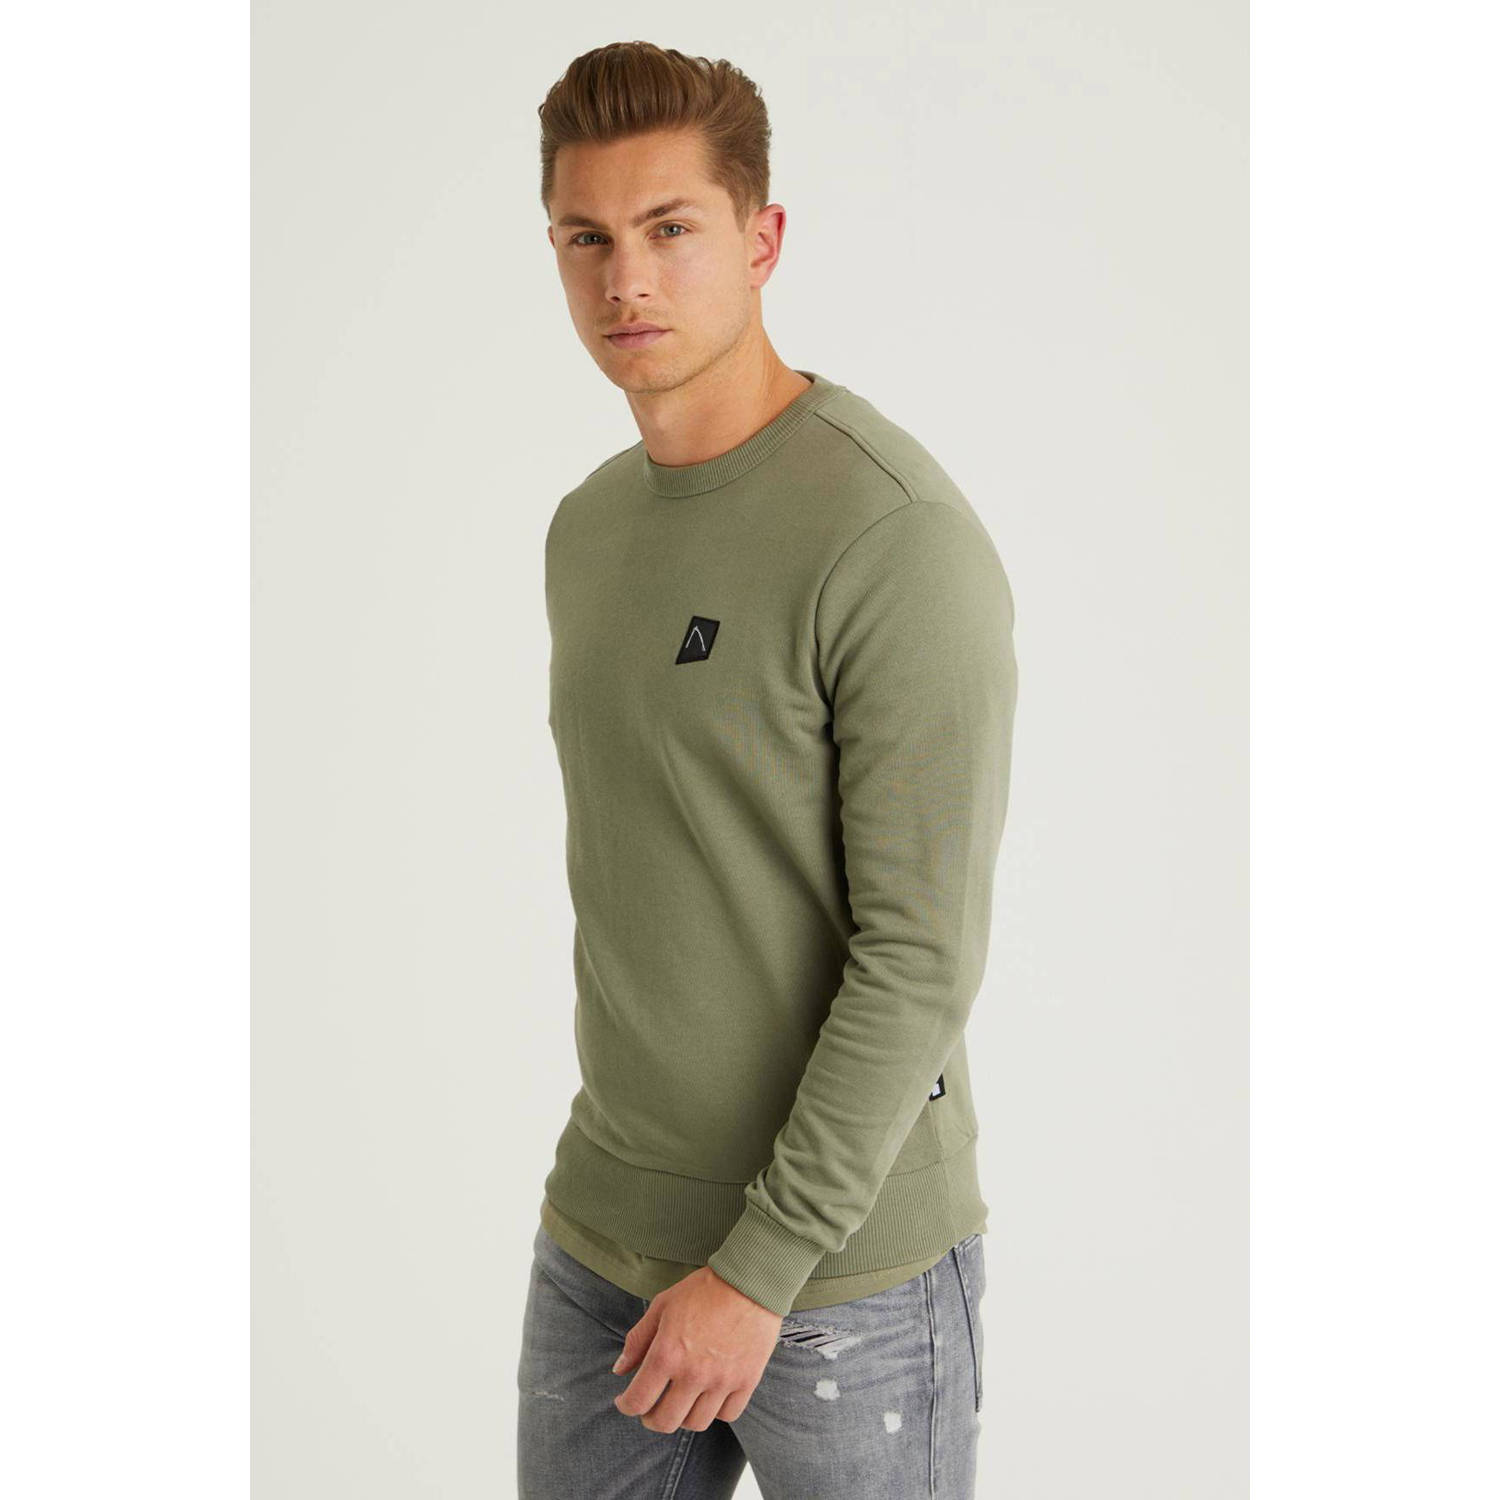 CHASIN' sweater Toby met logo mid green